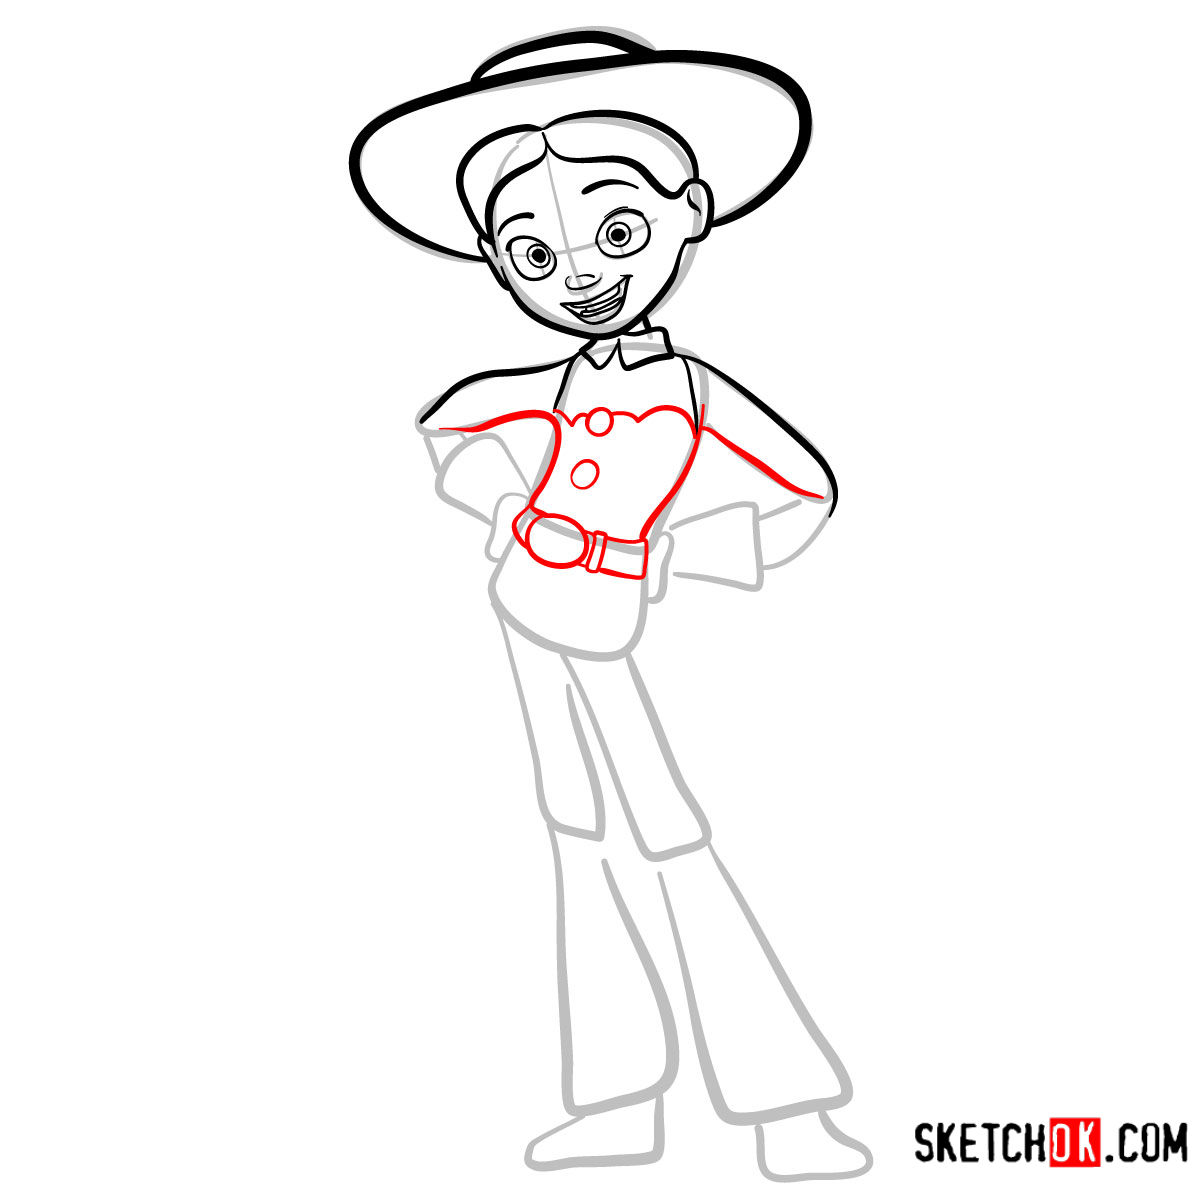 How to draw Jessie from Toy Story 2 - step 07